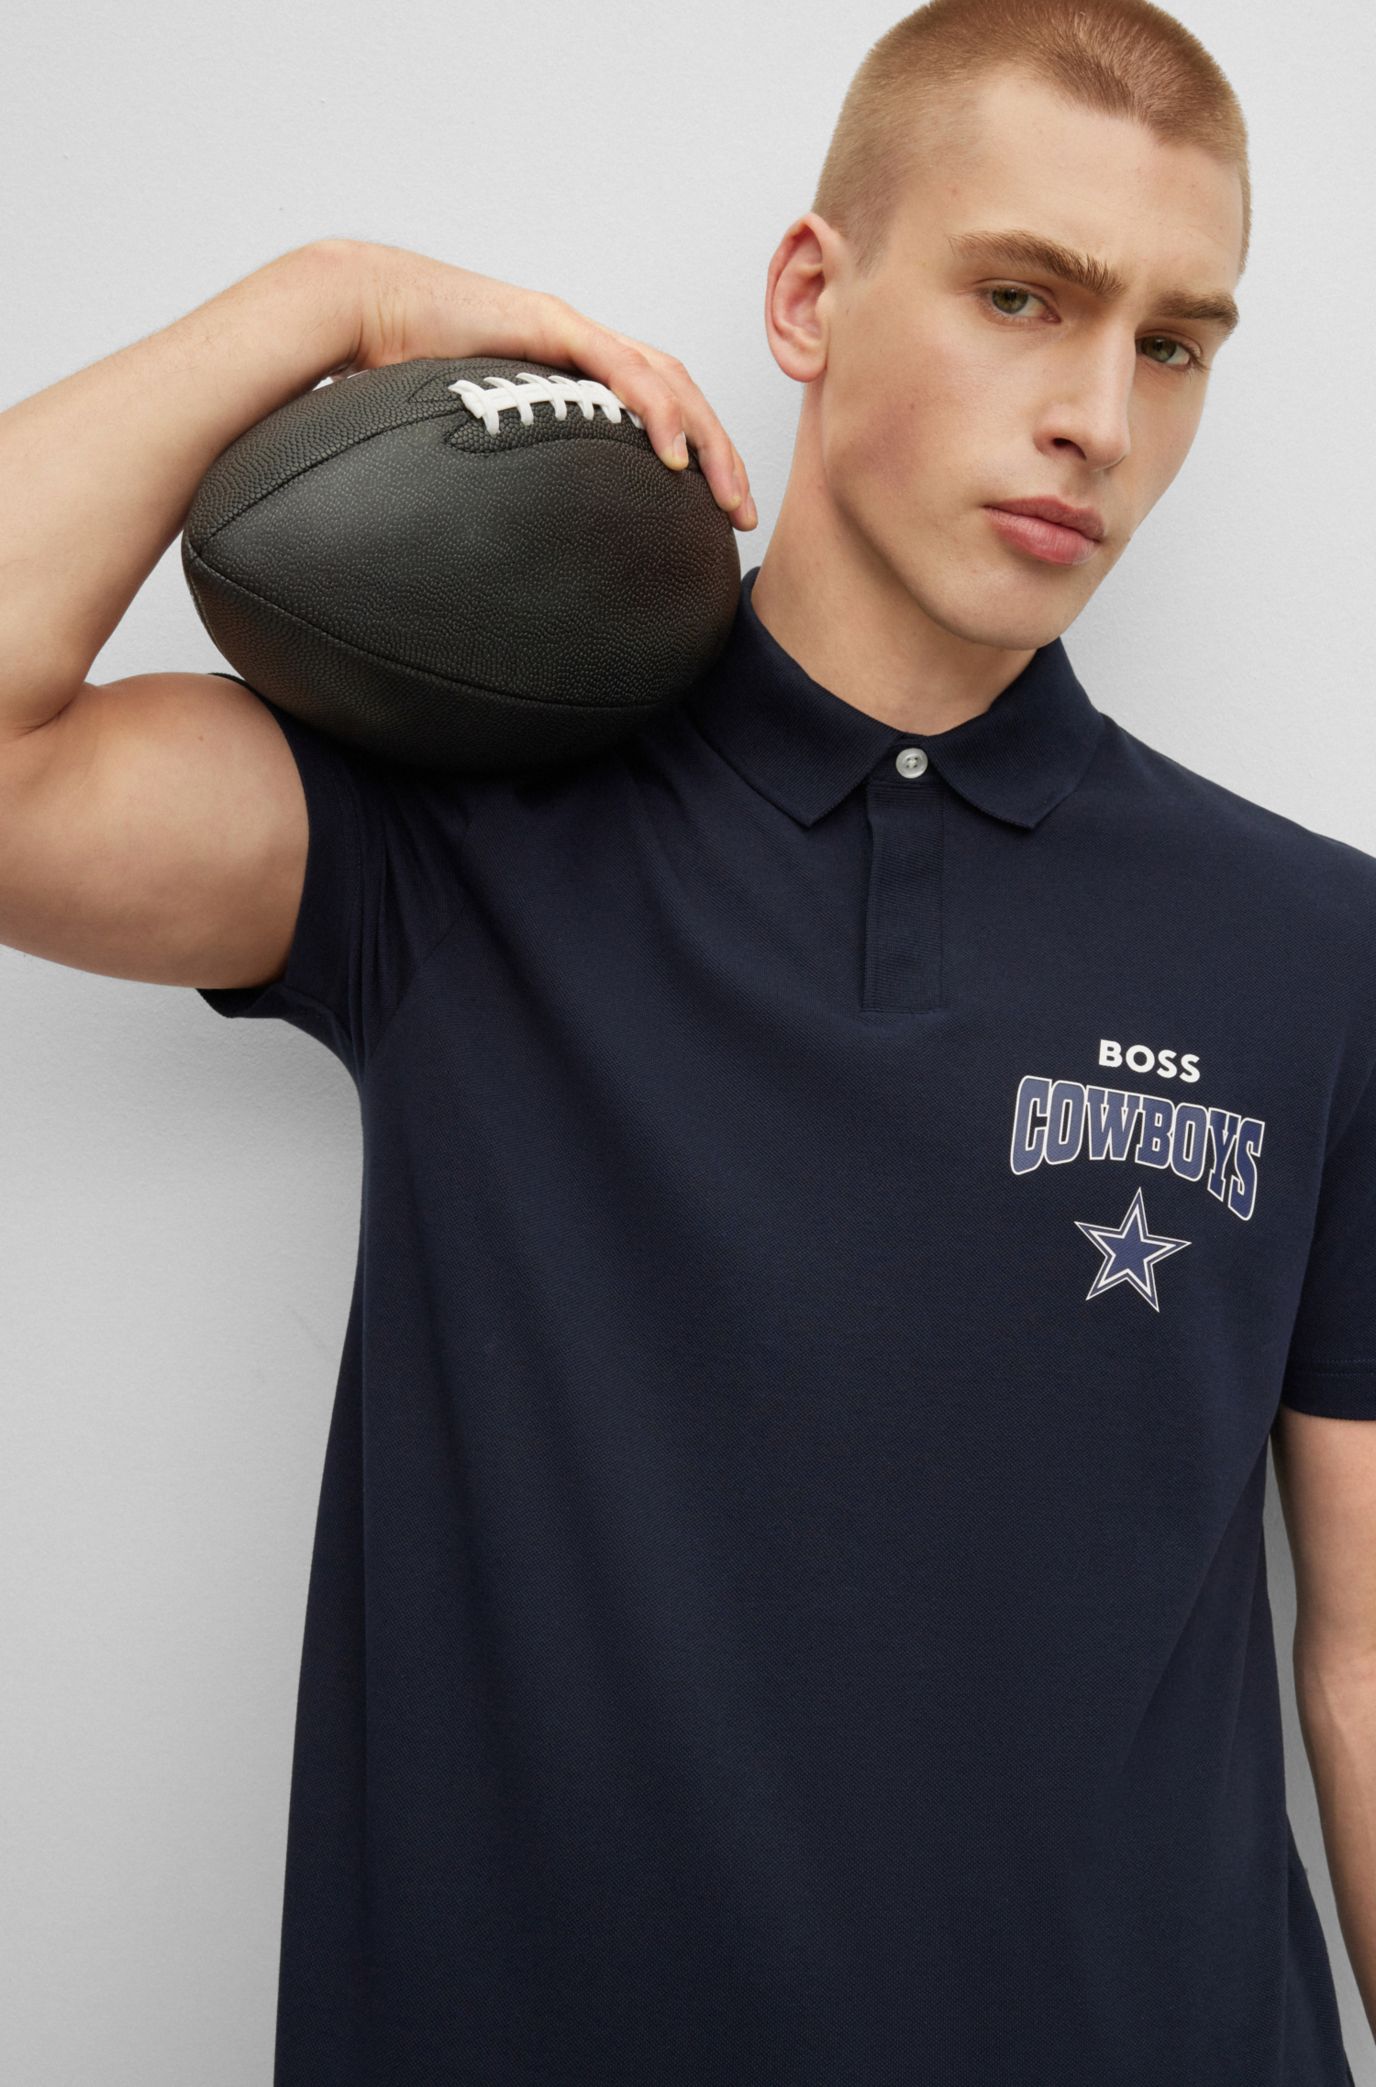 BOSS BOSS x NFL cotton-piqu polo shirt with collaborative branding in Cowboys | Men's Polo Shirts size M